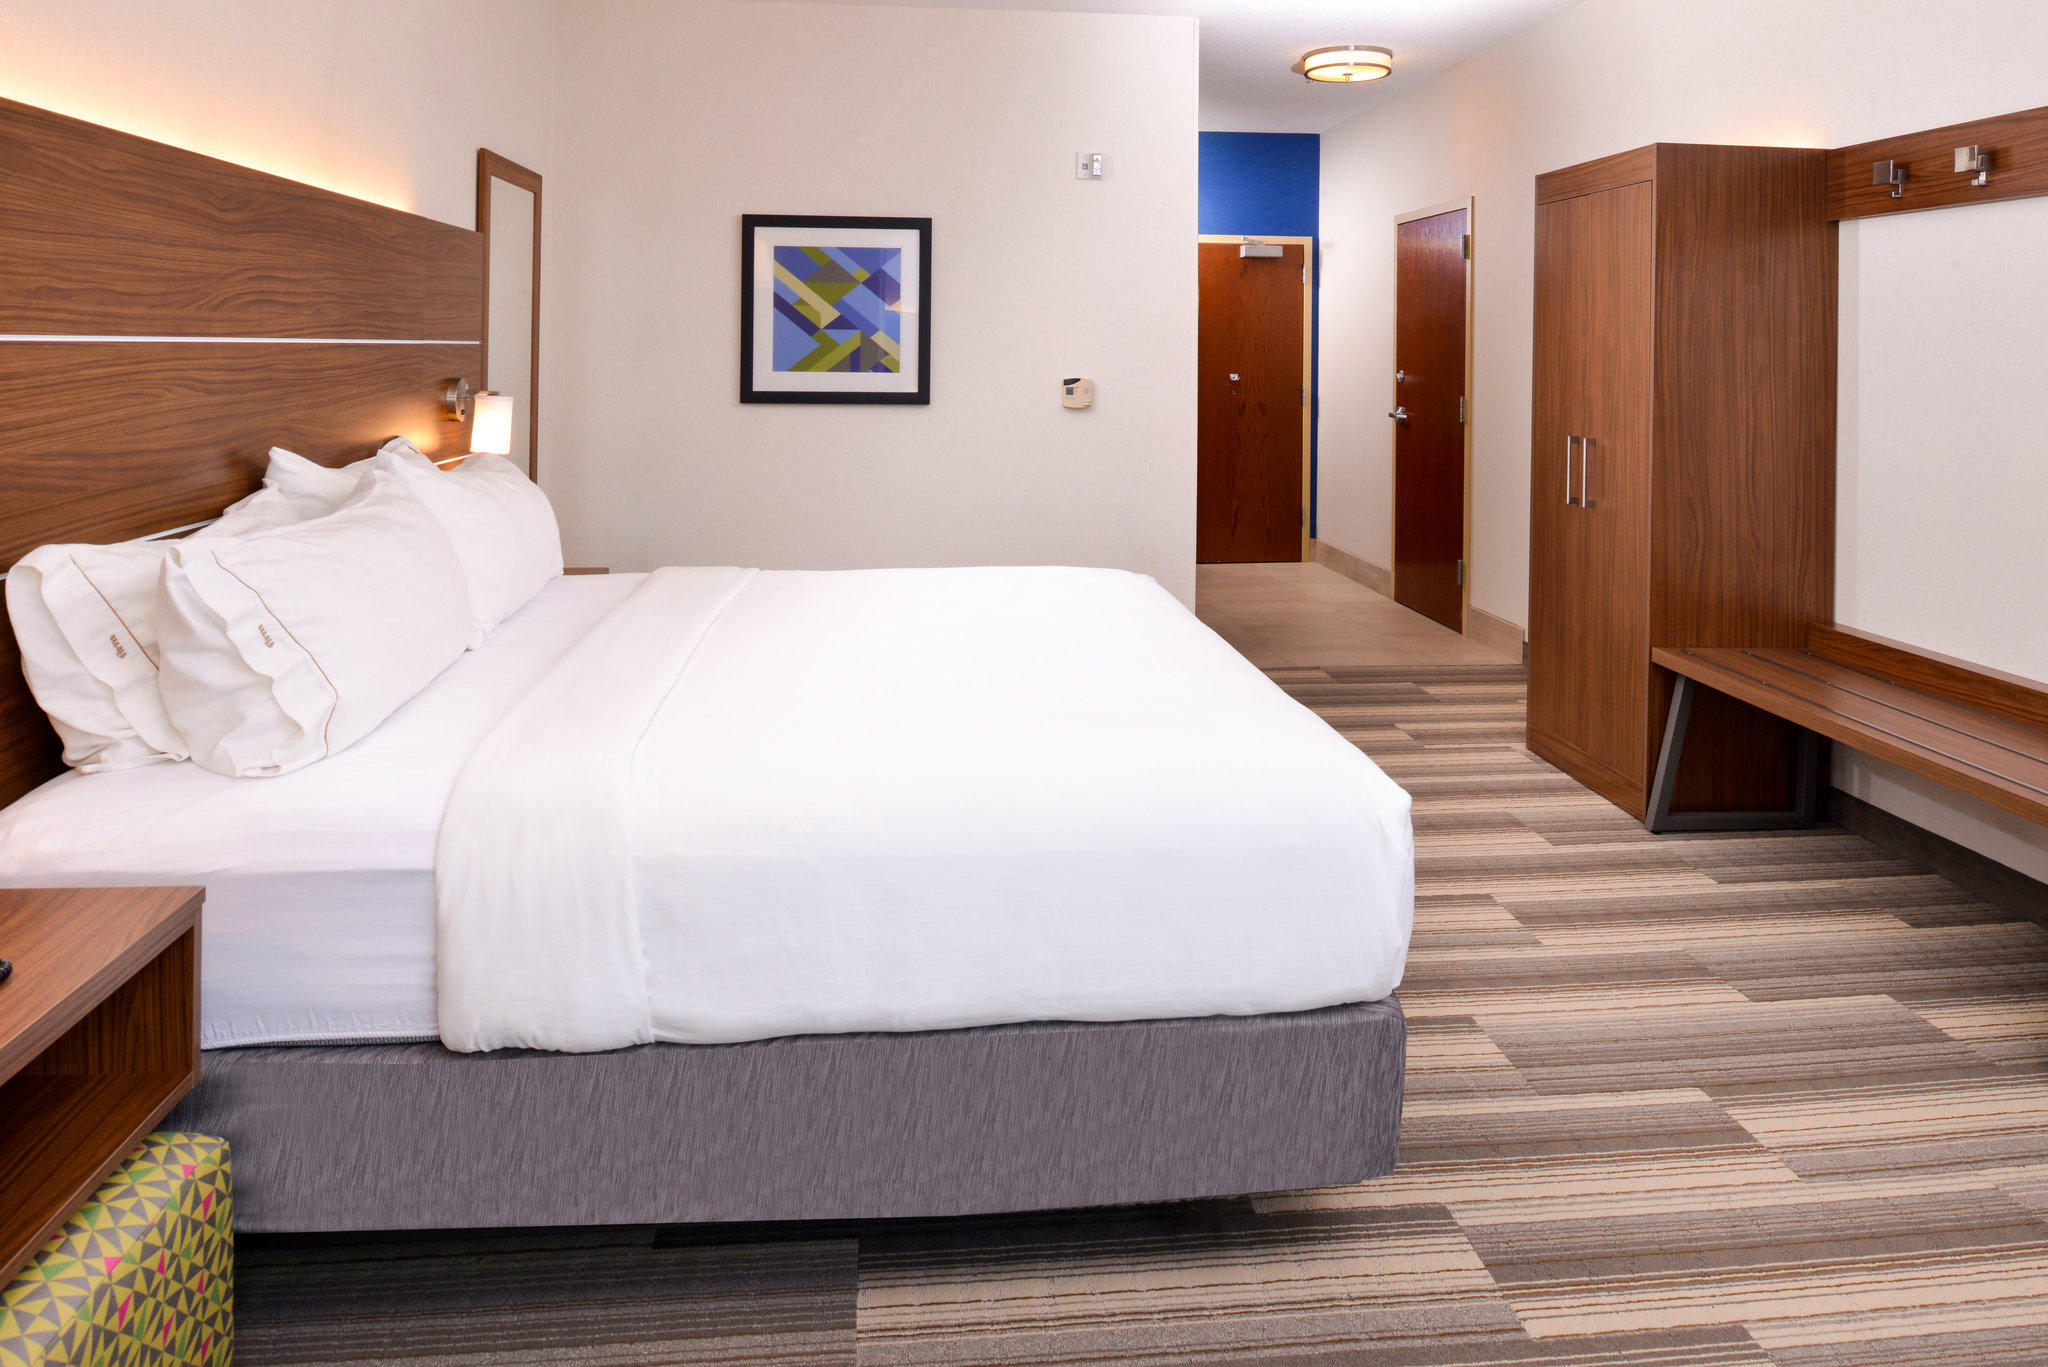 Holiday Inn Express & Suites Urbana-Champaign (U of I Area) Photo